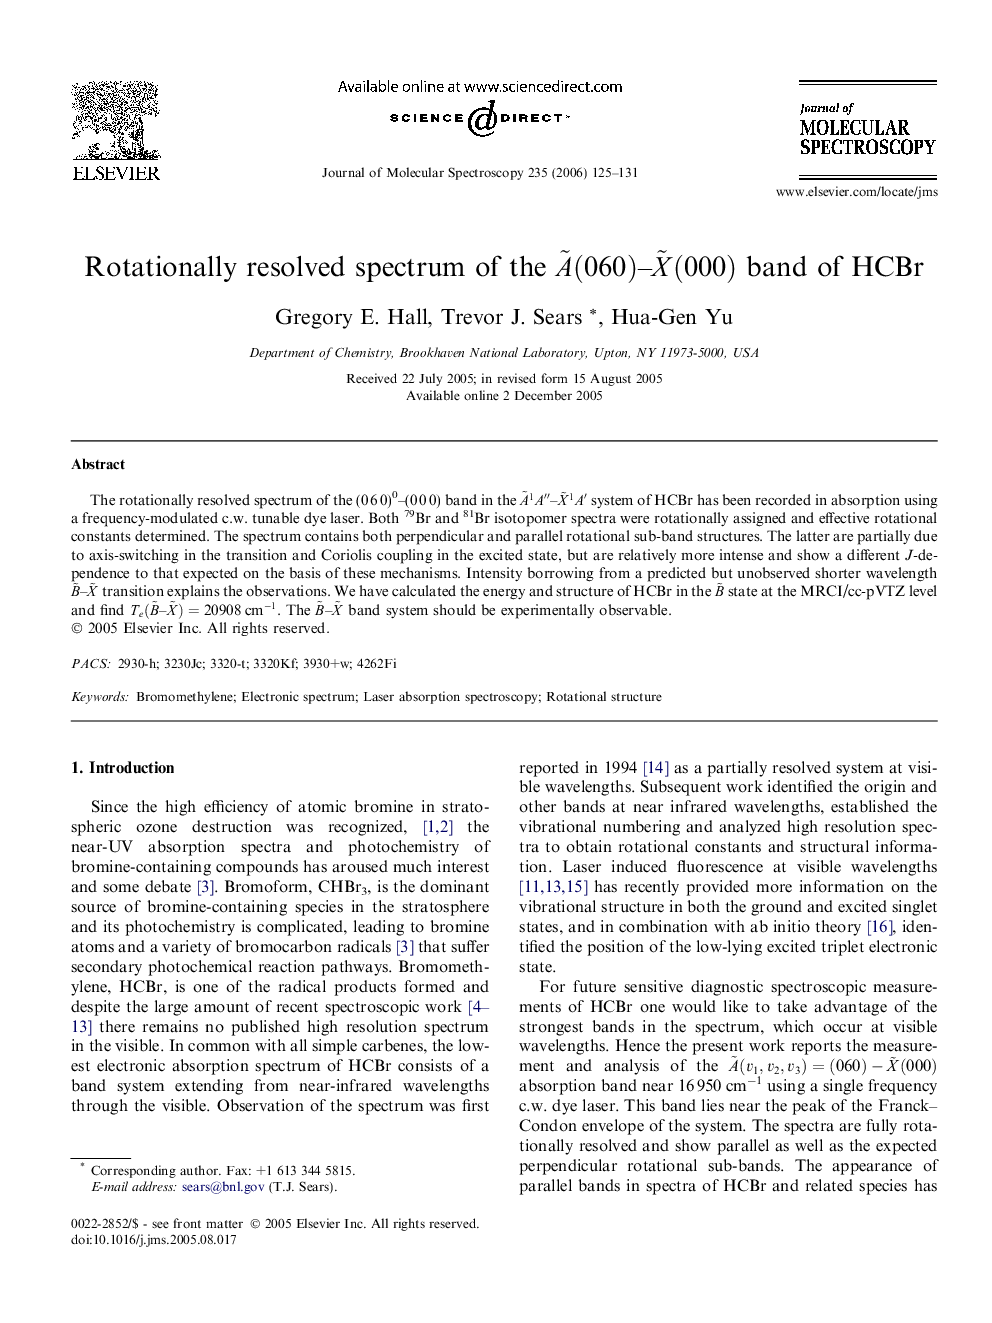 Rotationally resolved spectrum of the AË(060)-XË(000) band of HCBr